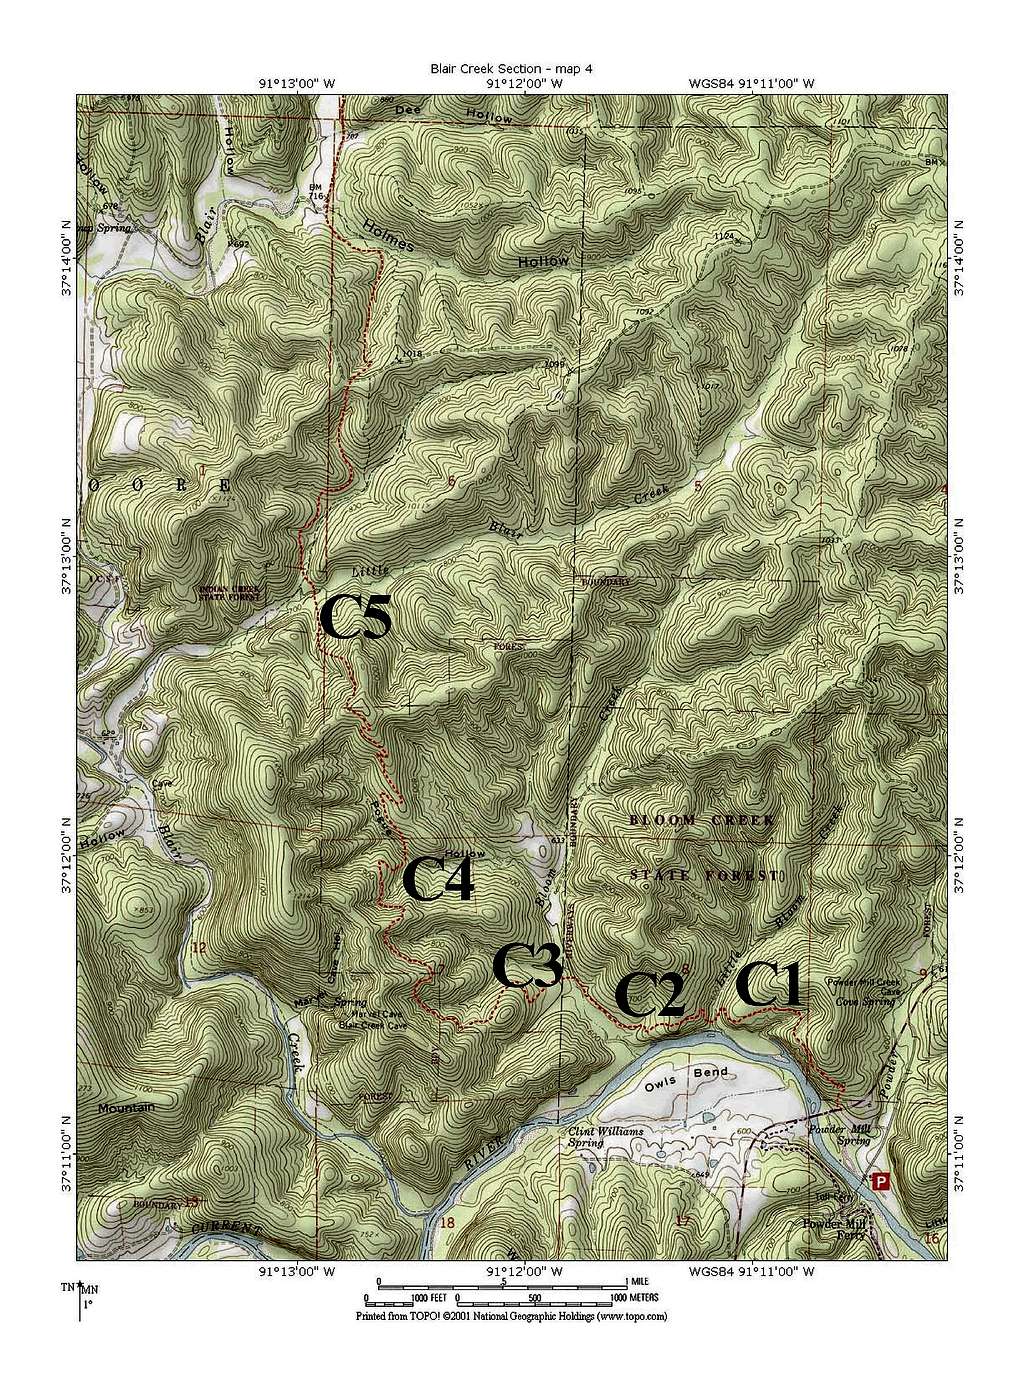 Campsites, Blair Creek Section #4, Ozark Trail